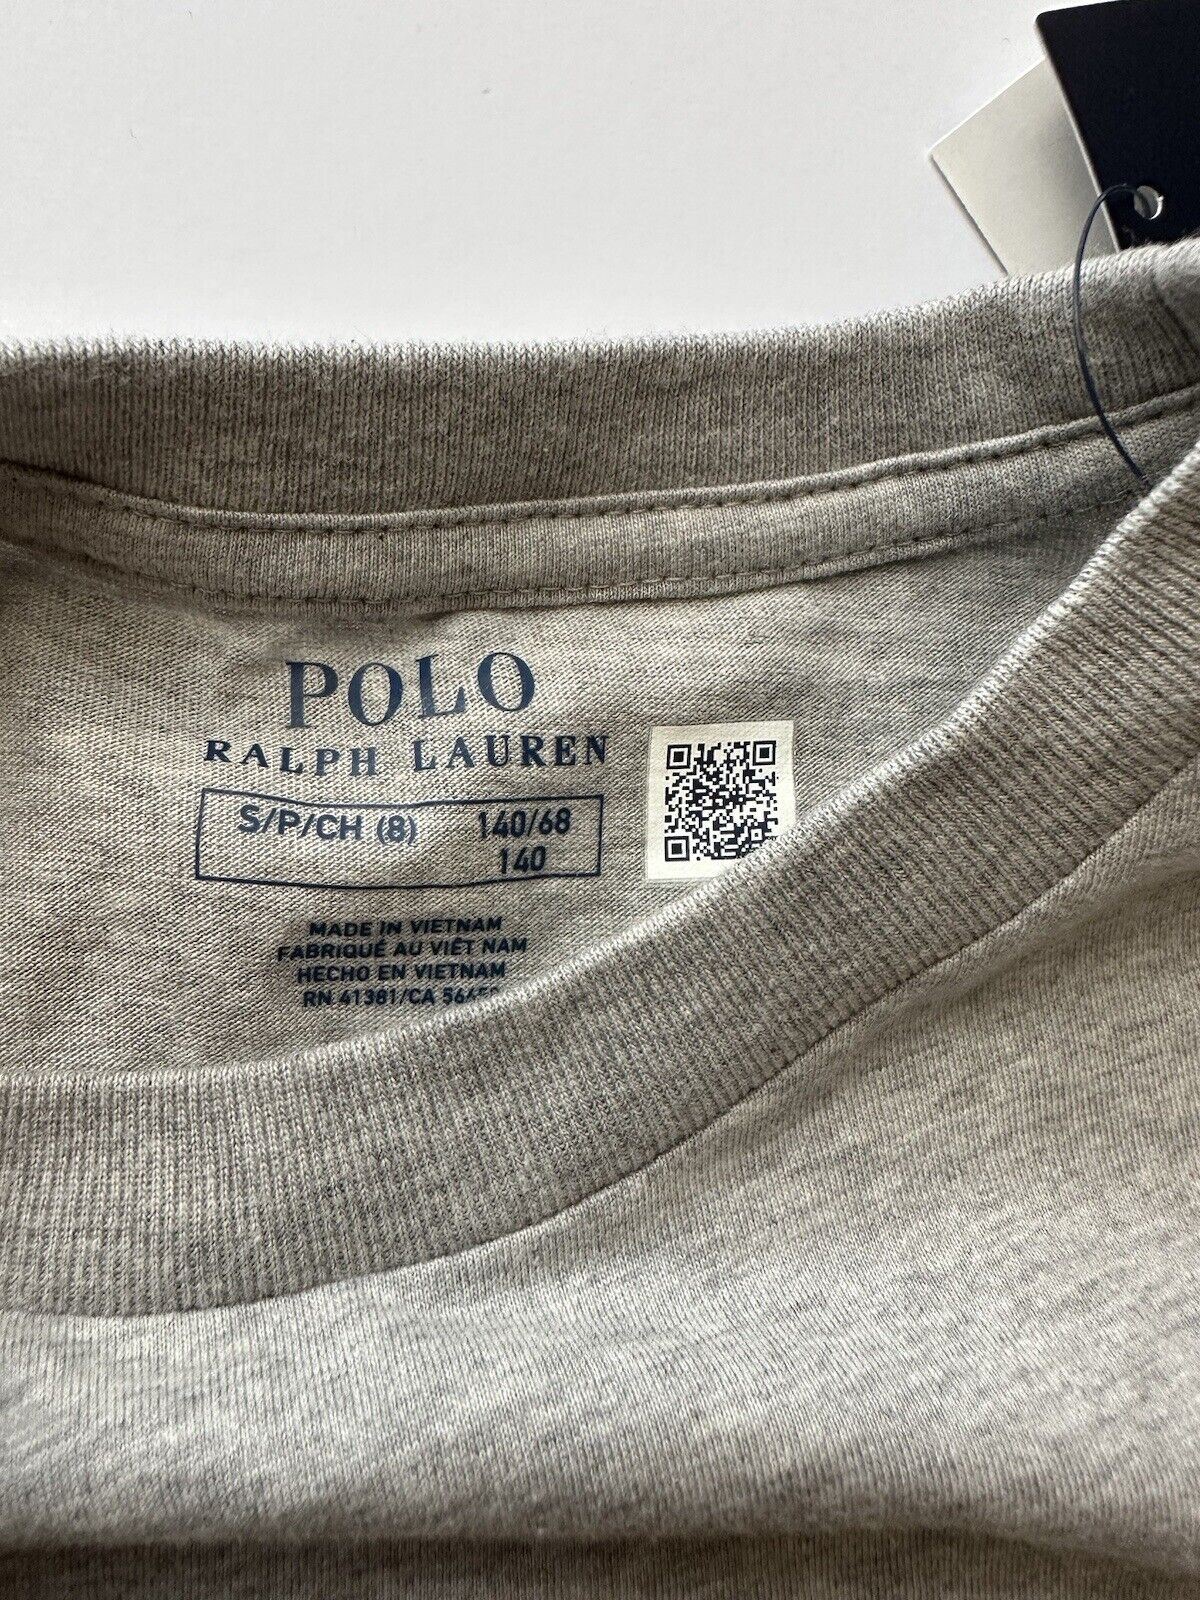 NWT Polo Ralph Lauren Bear Boy's T-Shirt Gray Size S (8)